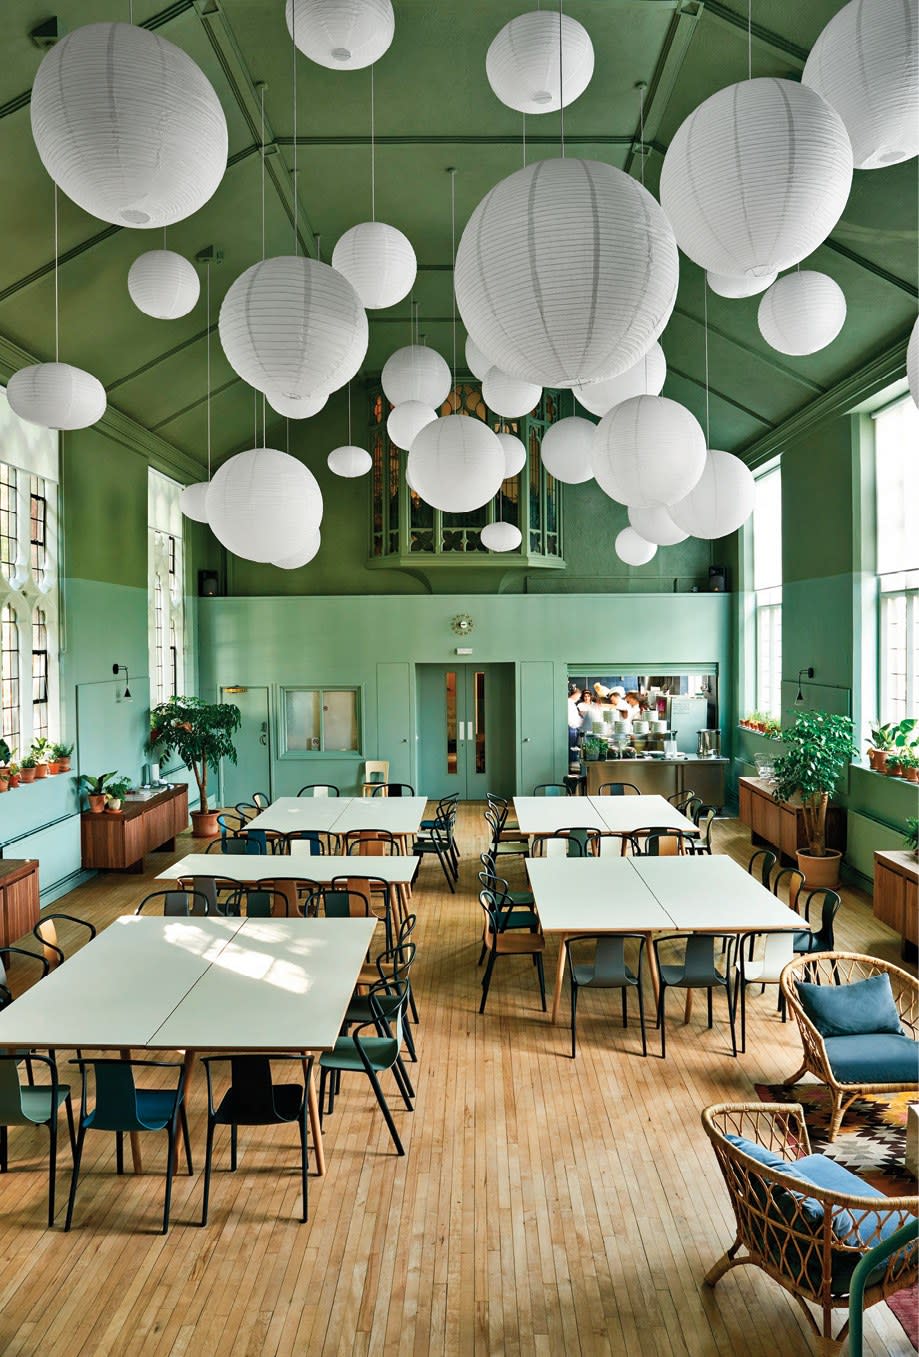 The Studioilse-designed Food for Soul dining room in London.